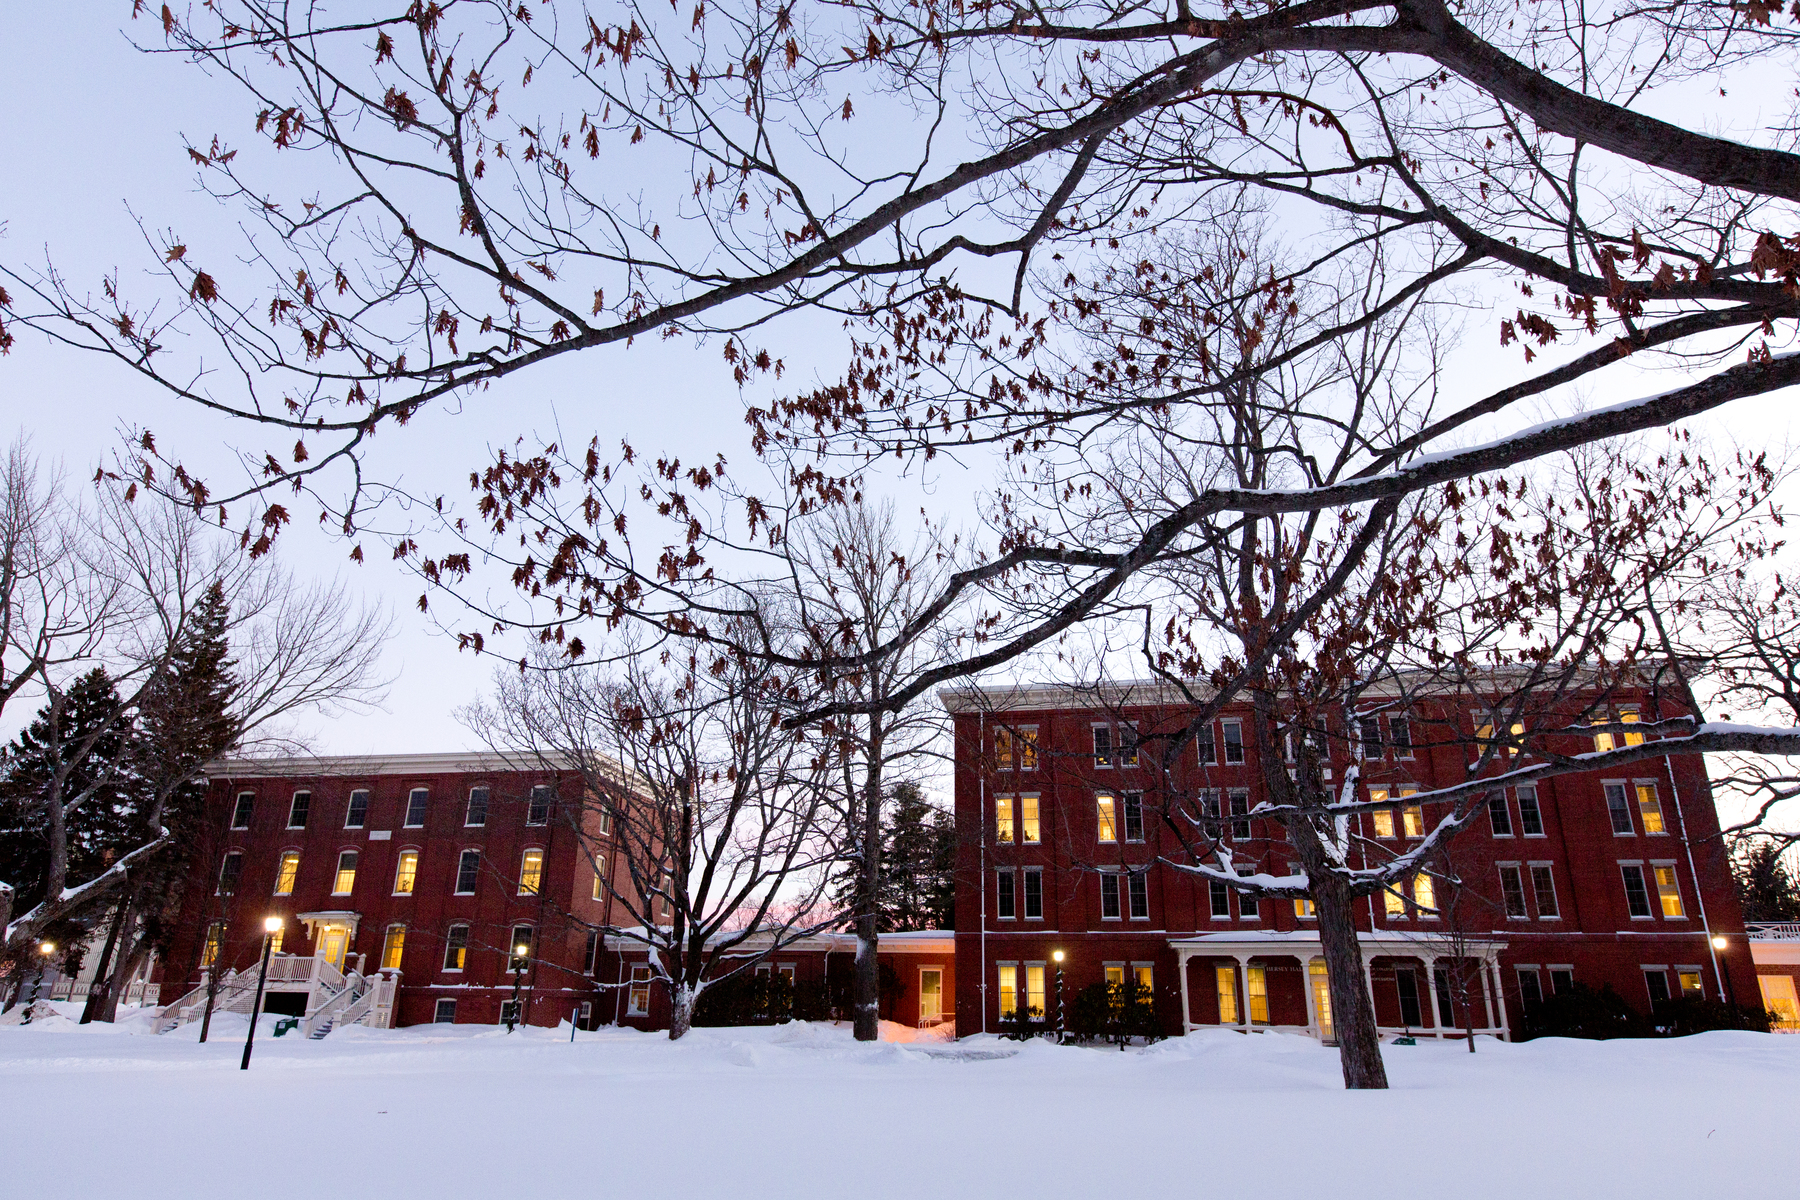 The Portland Campus’ mid-winter coziness